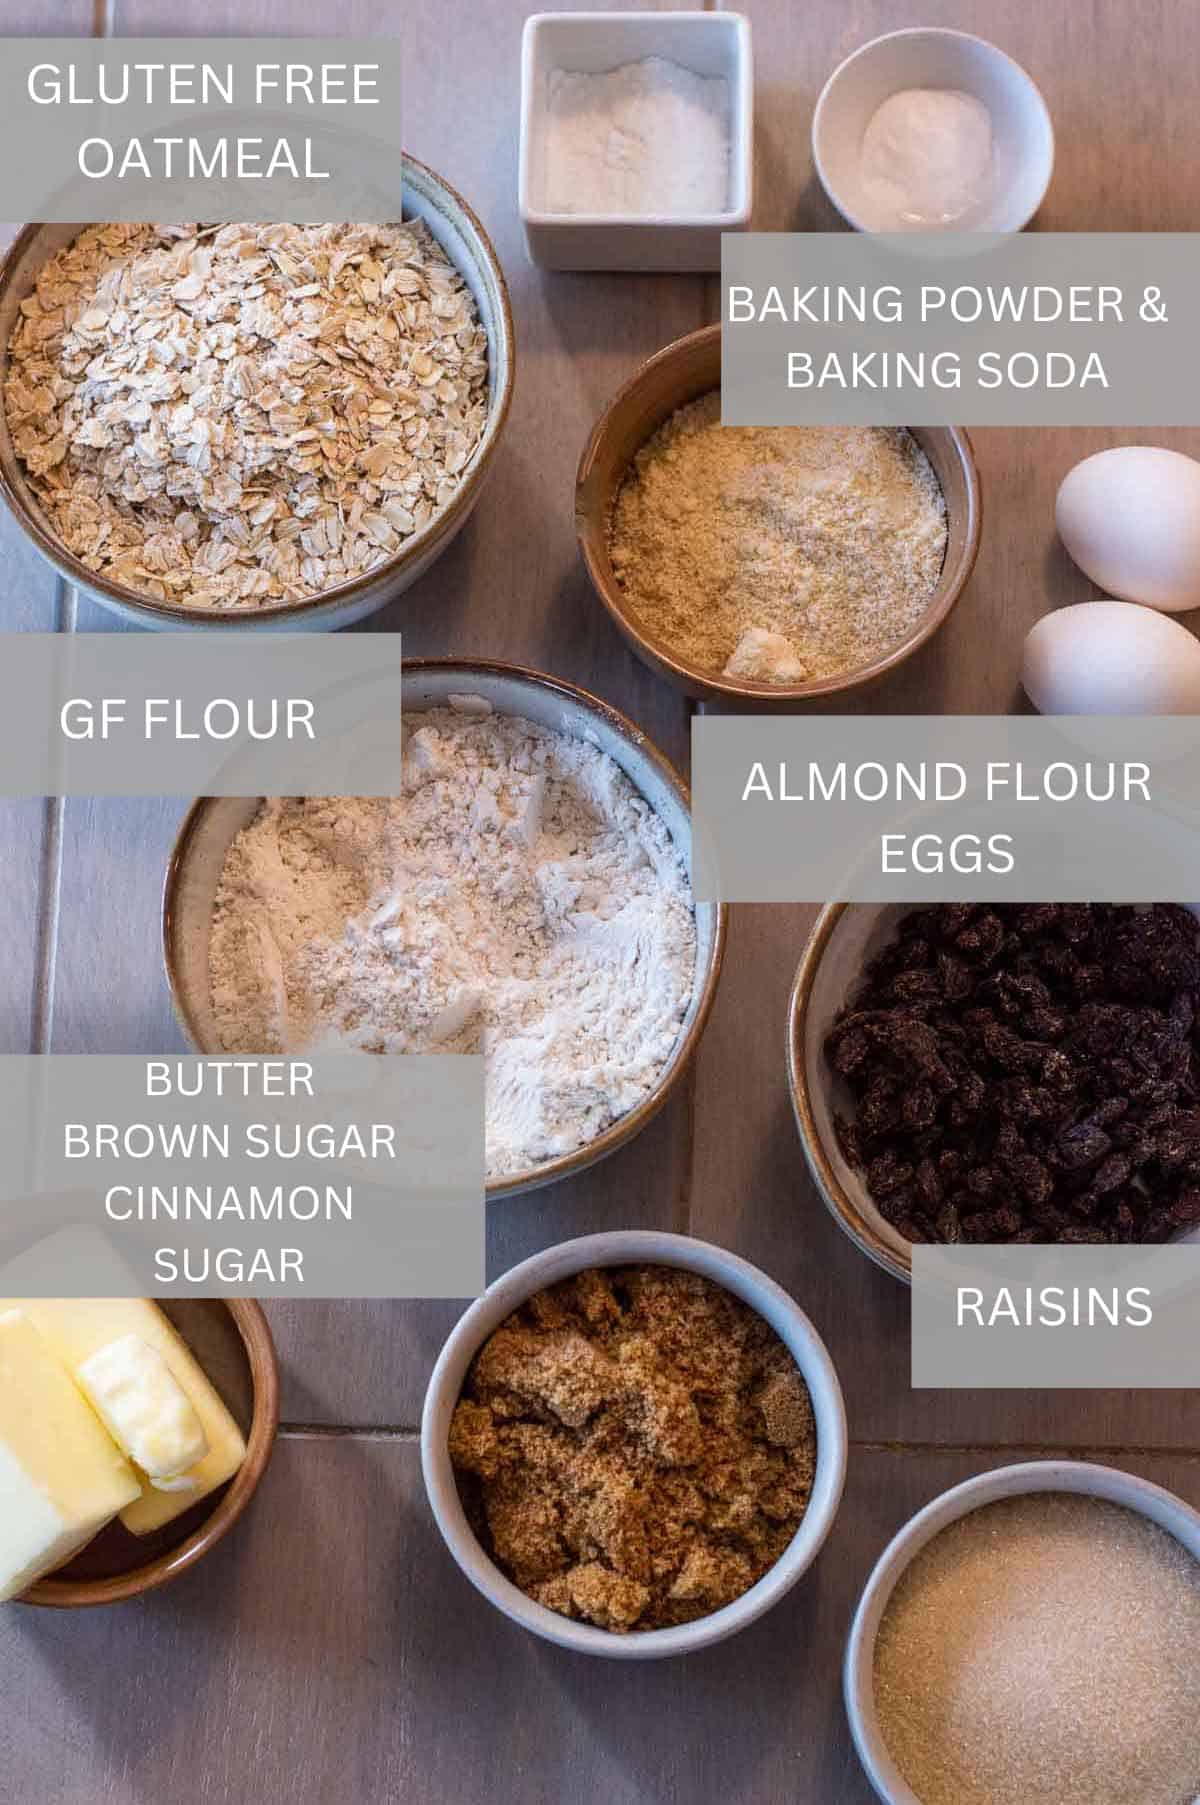 Gluten Free Oatmeal Raisin Cookies Ingredients